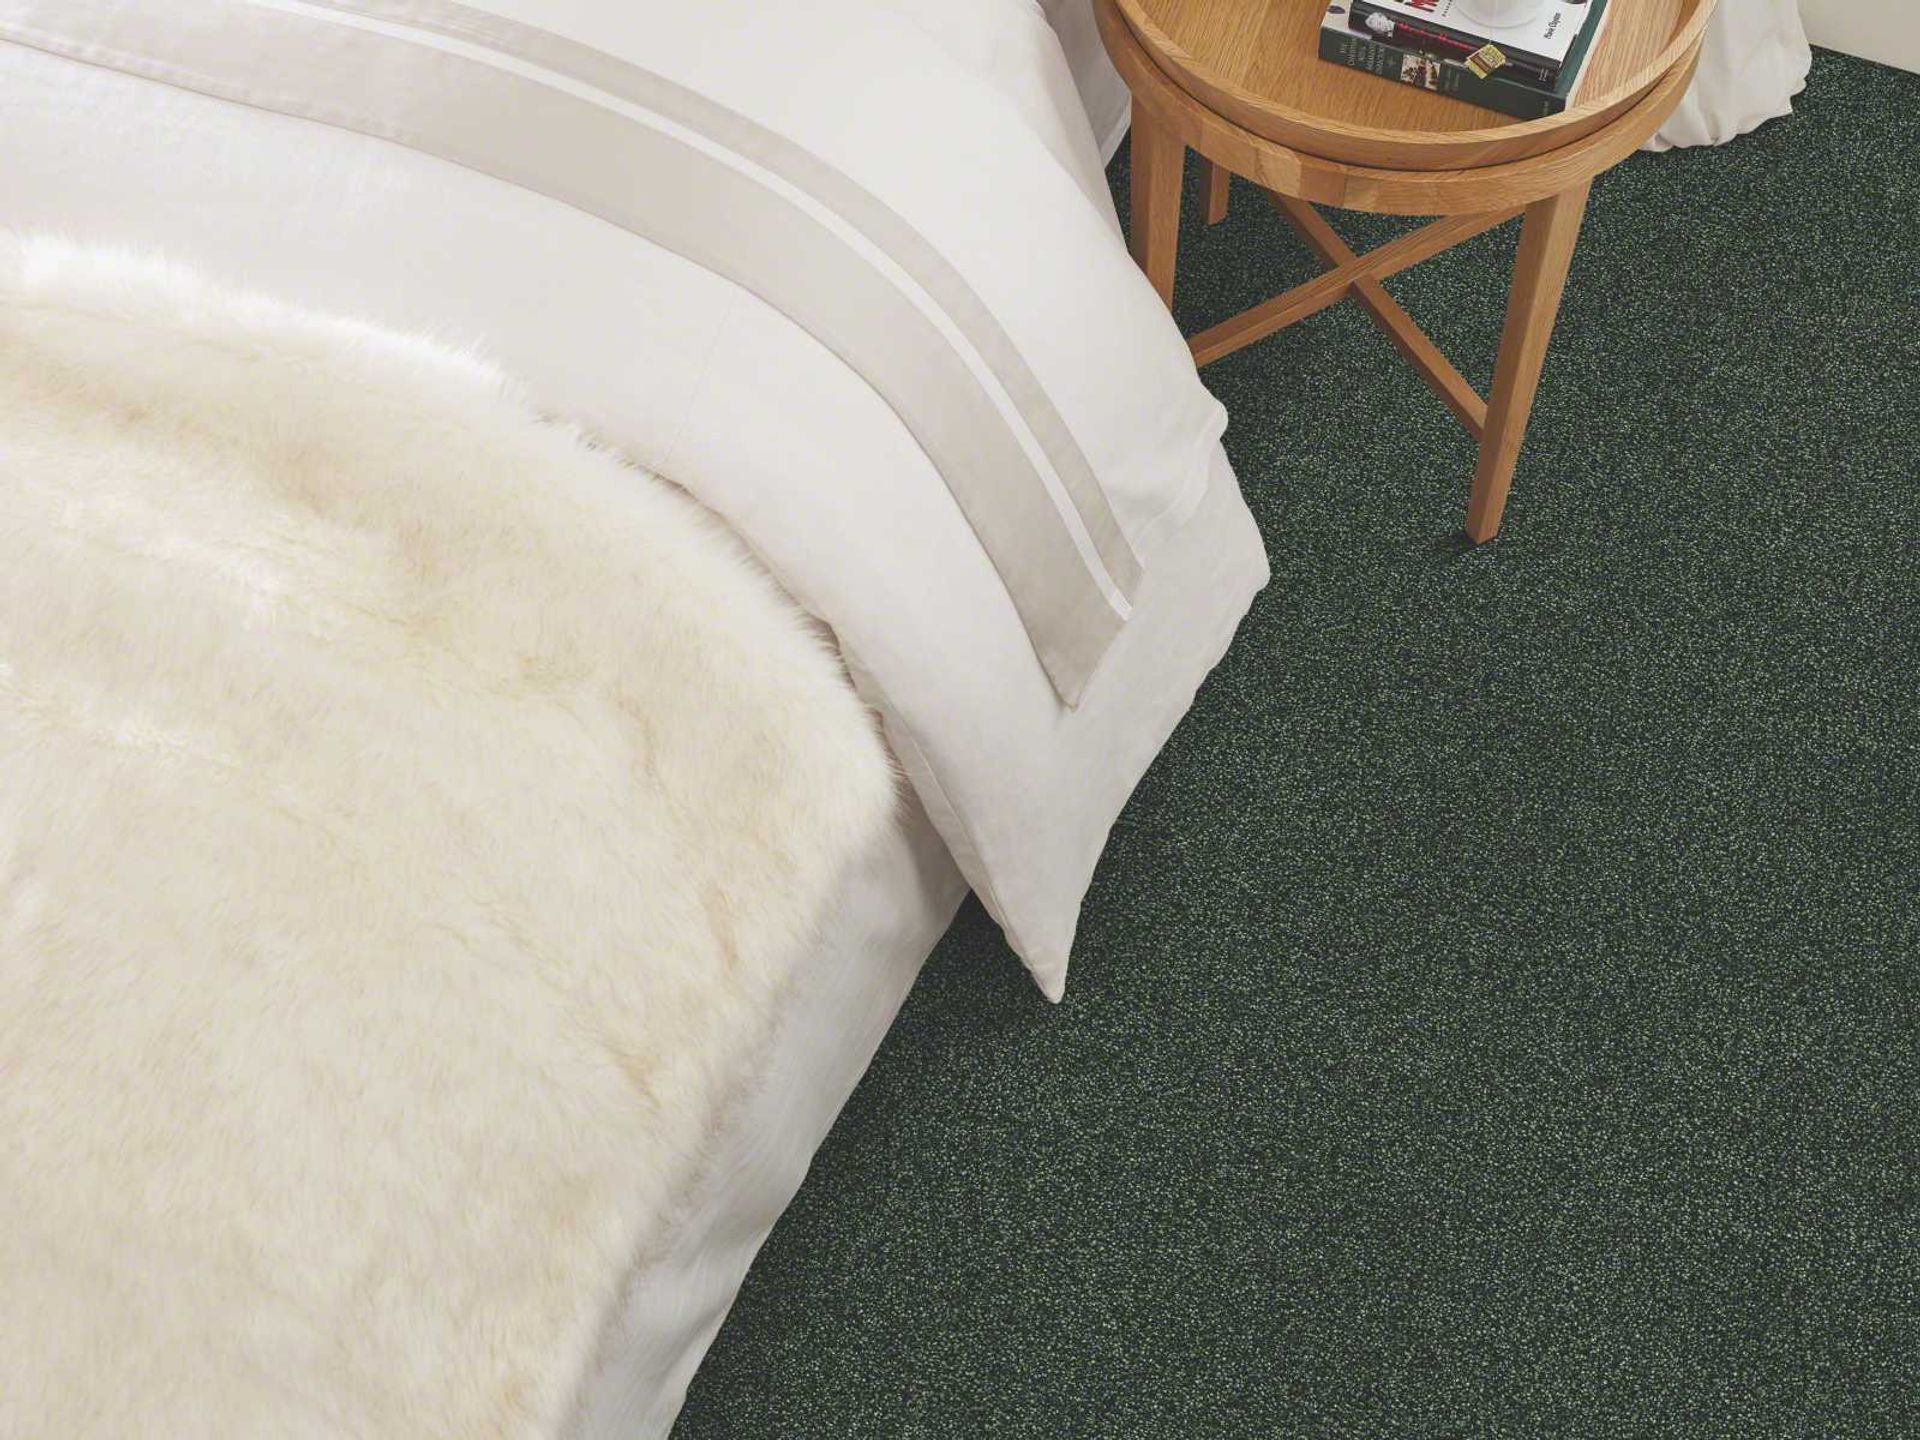 Benefits of Carpet - The Carpet and Rug Institute